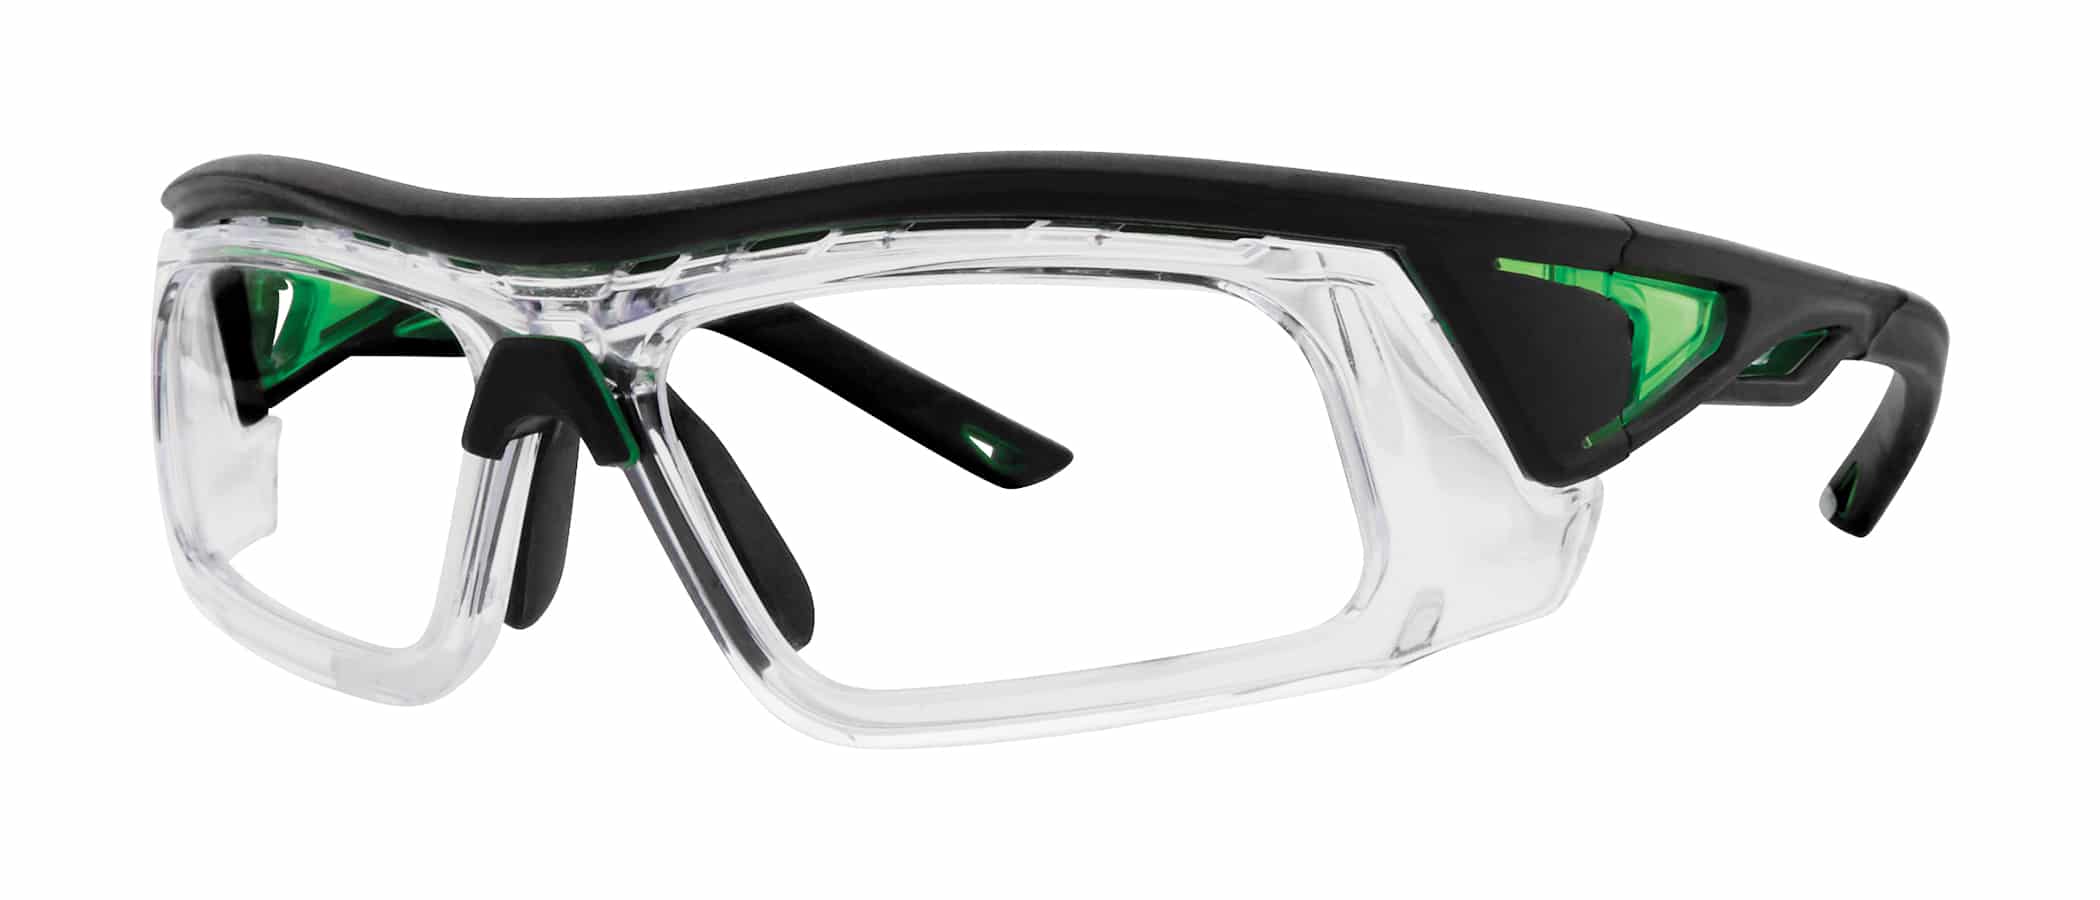 Pentax Zt400 Ansi Rated Prescription Safety Glasses